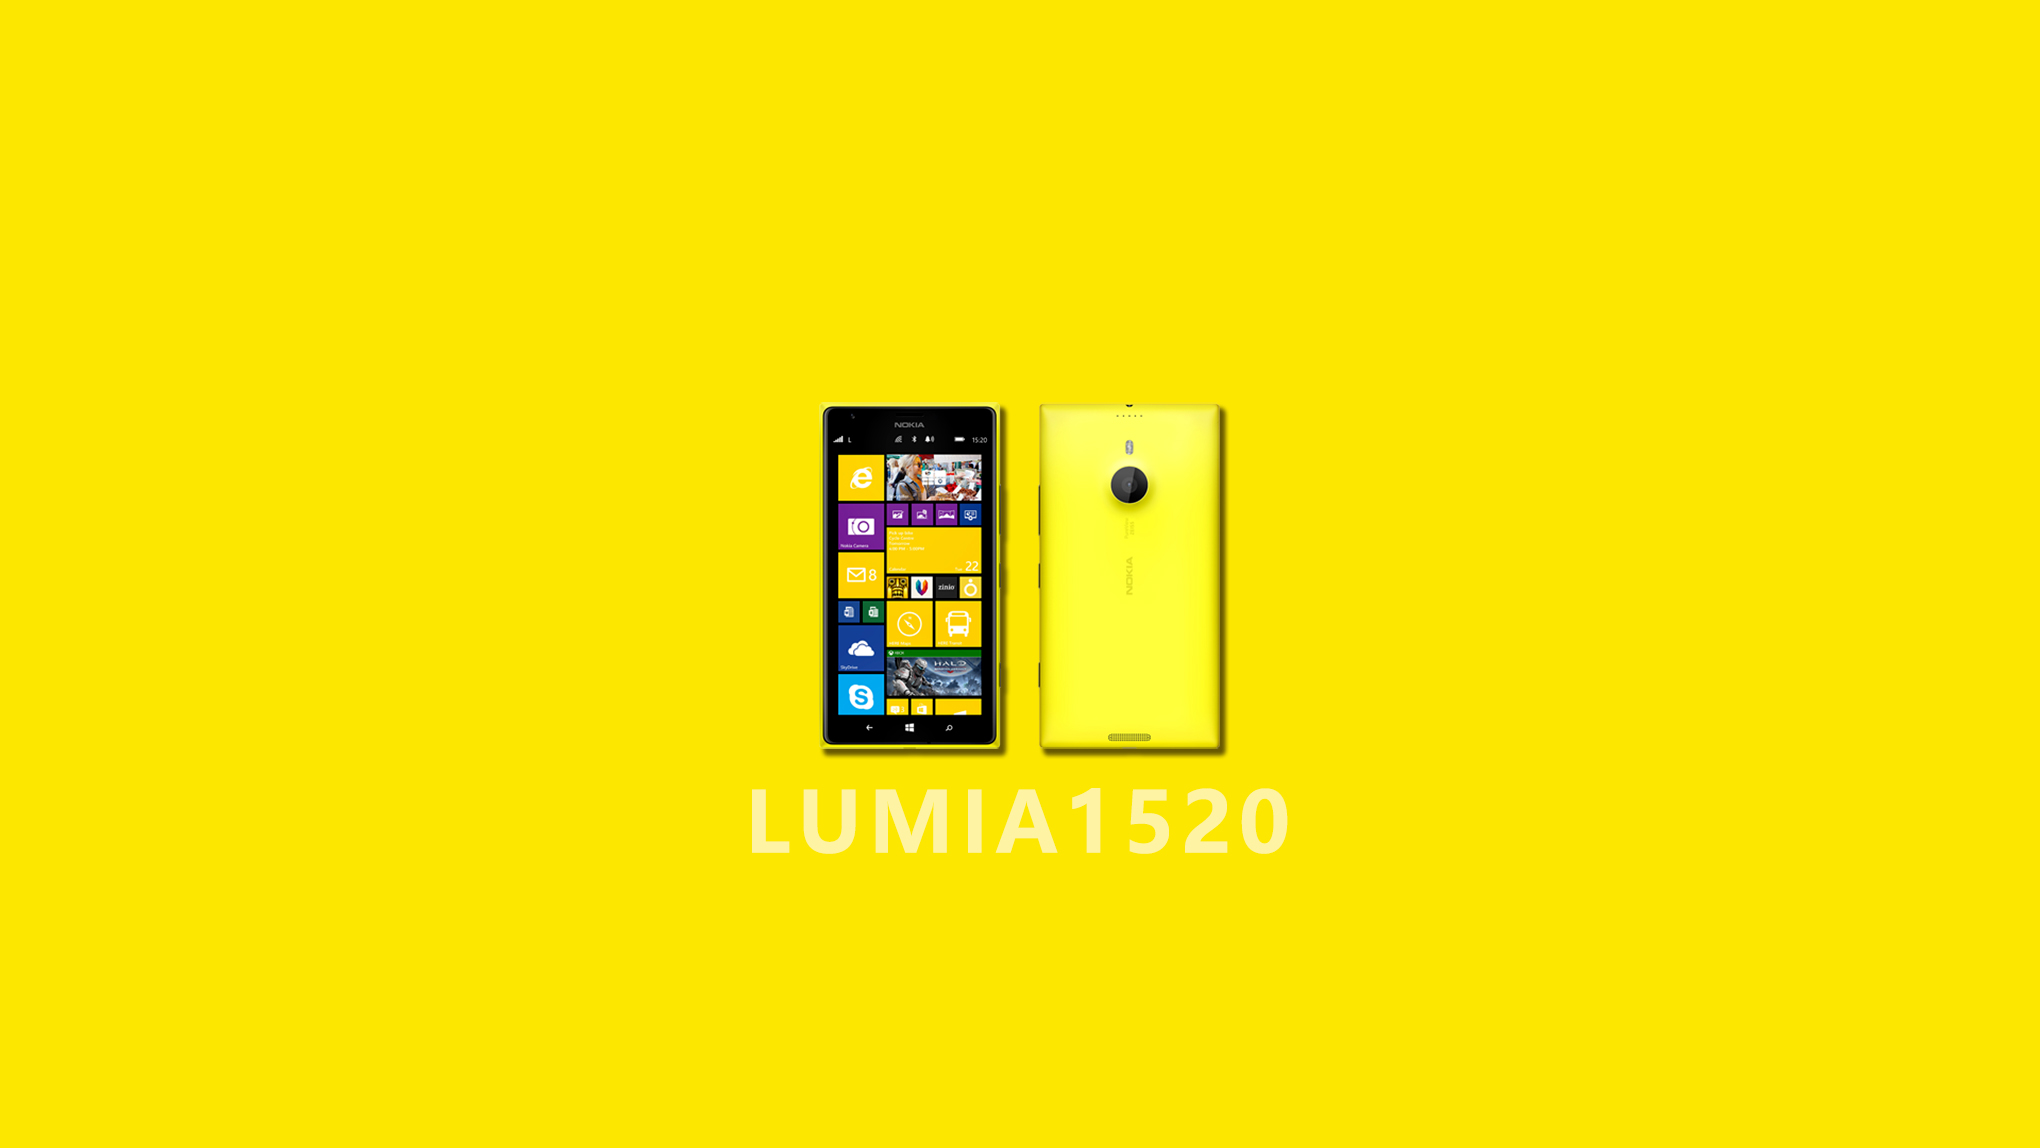 General 2040x1148 lumia nokia Microsoft phone technology yellow background smartphone Windows Phone minimalism